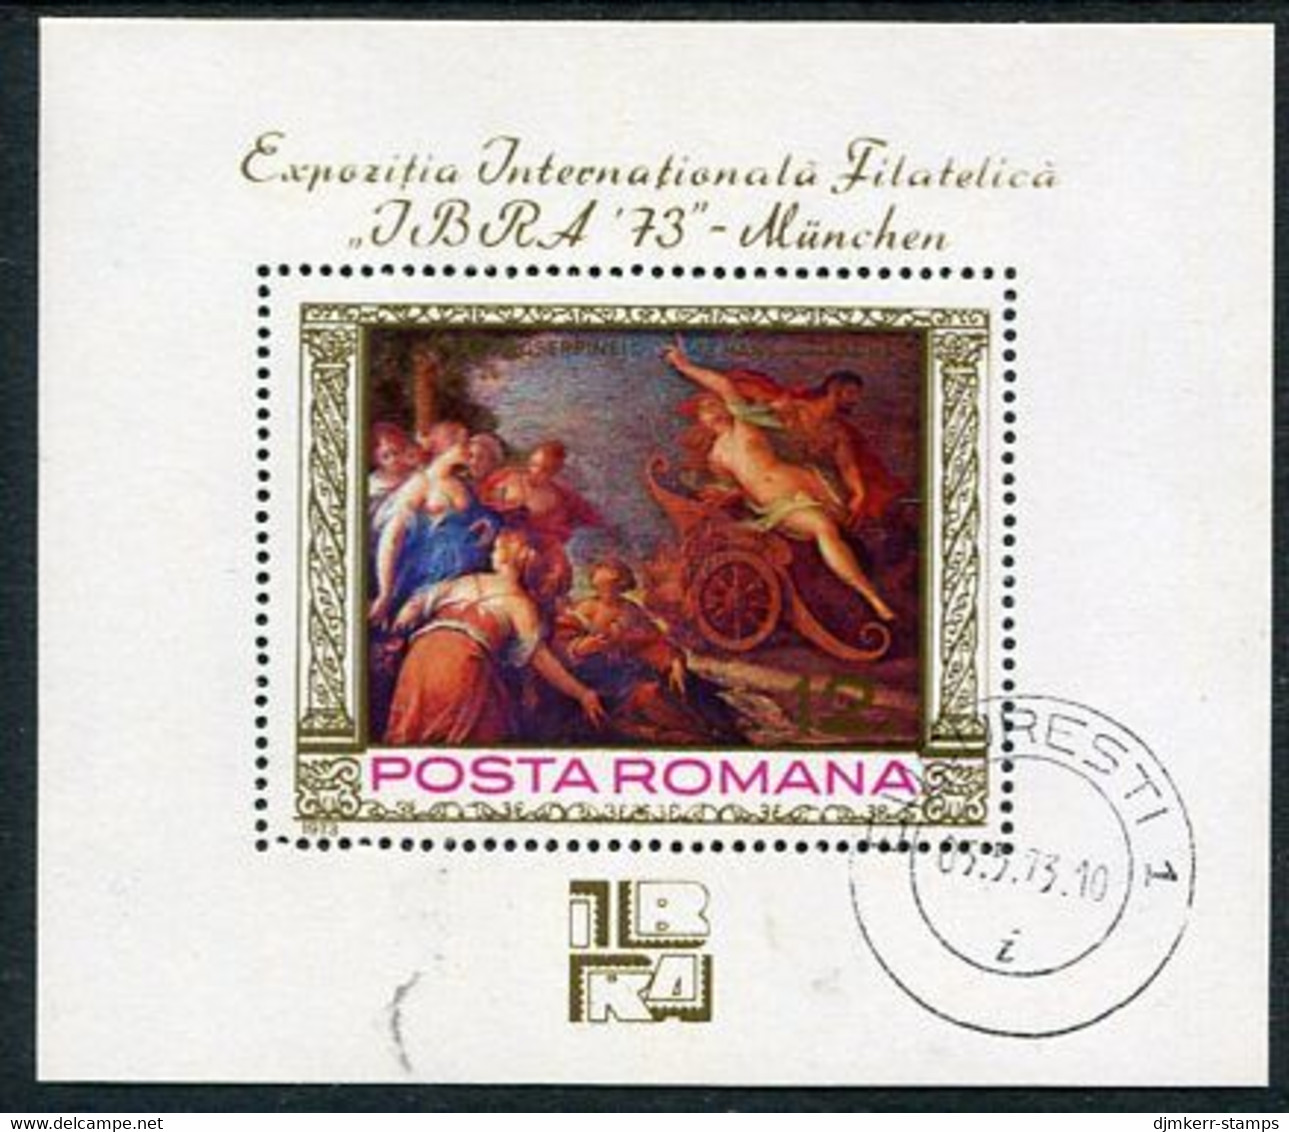 ROMANIA 1973 IBRA '73 Stamp Exhibition Used.  Michel Block 104 - Usado